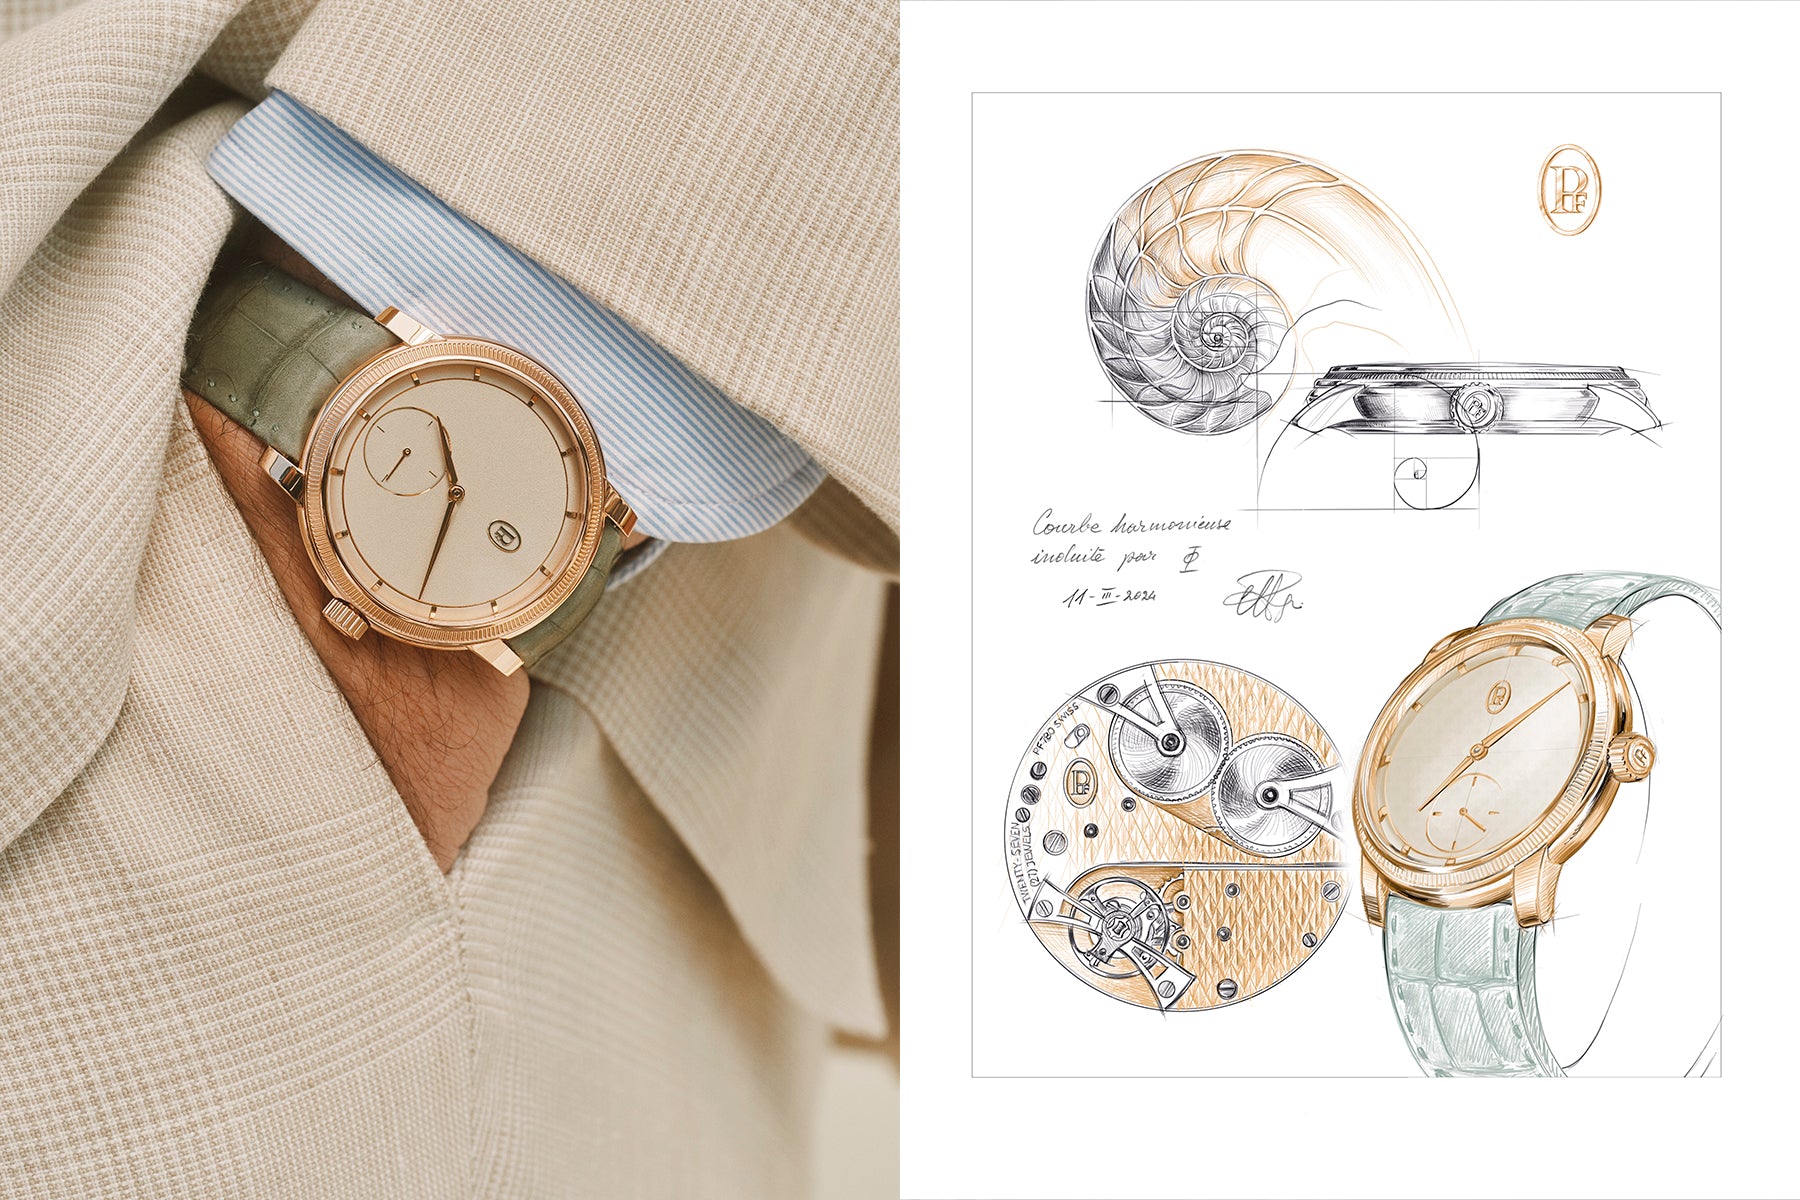 Parmigiani Fleurier New Watch Sketch